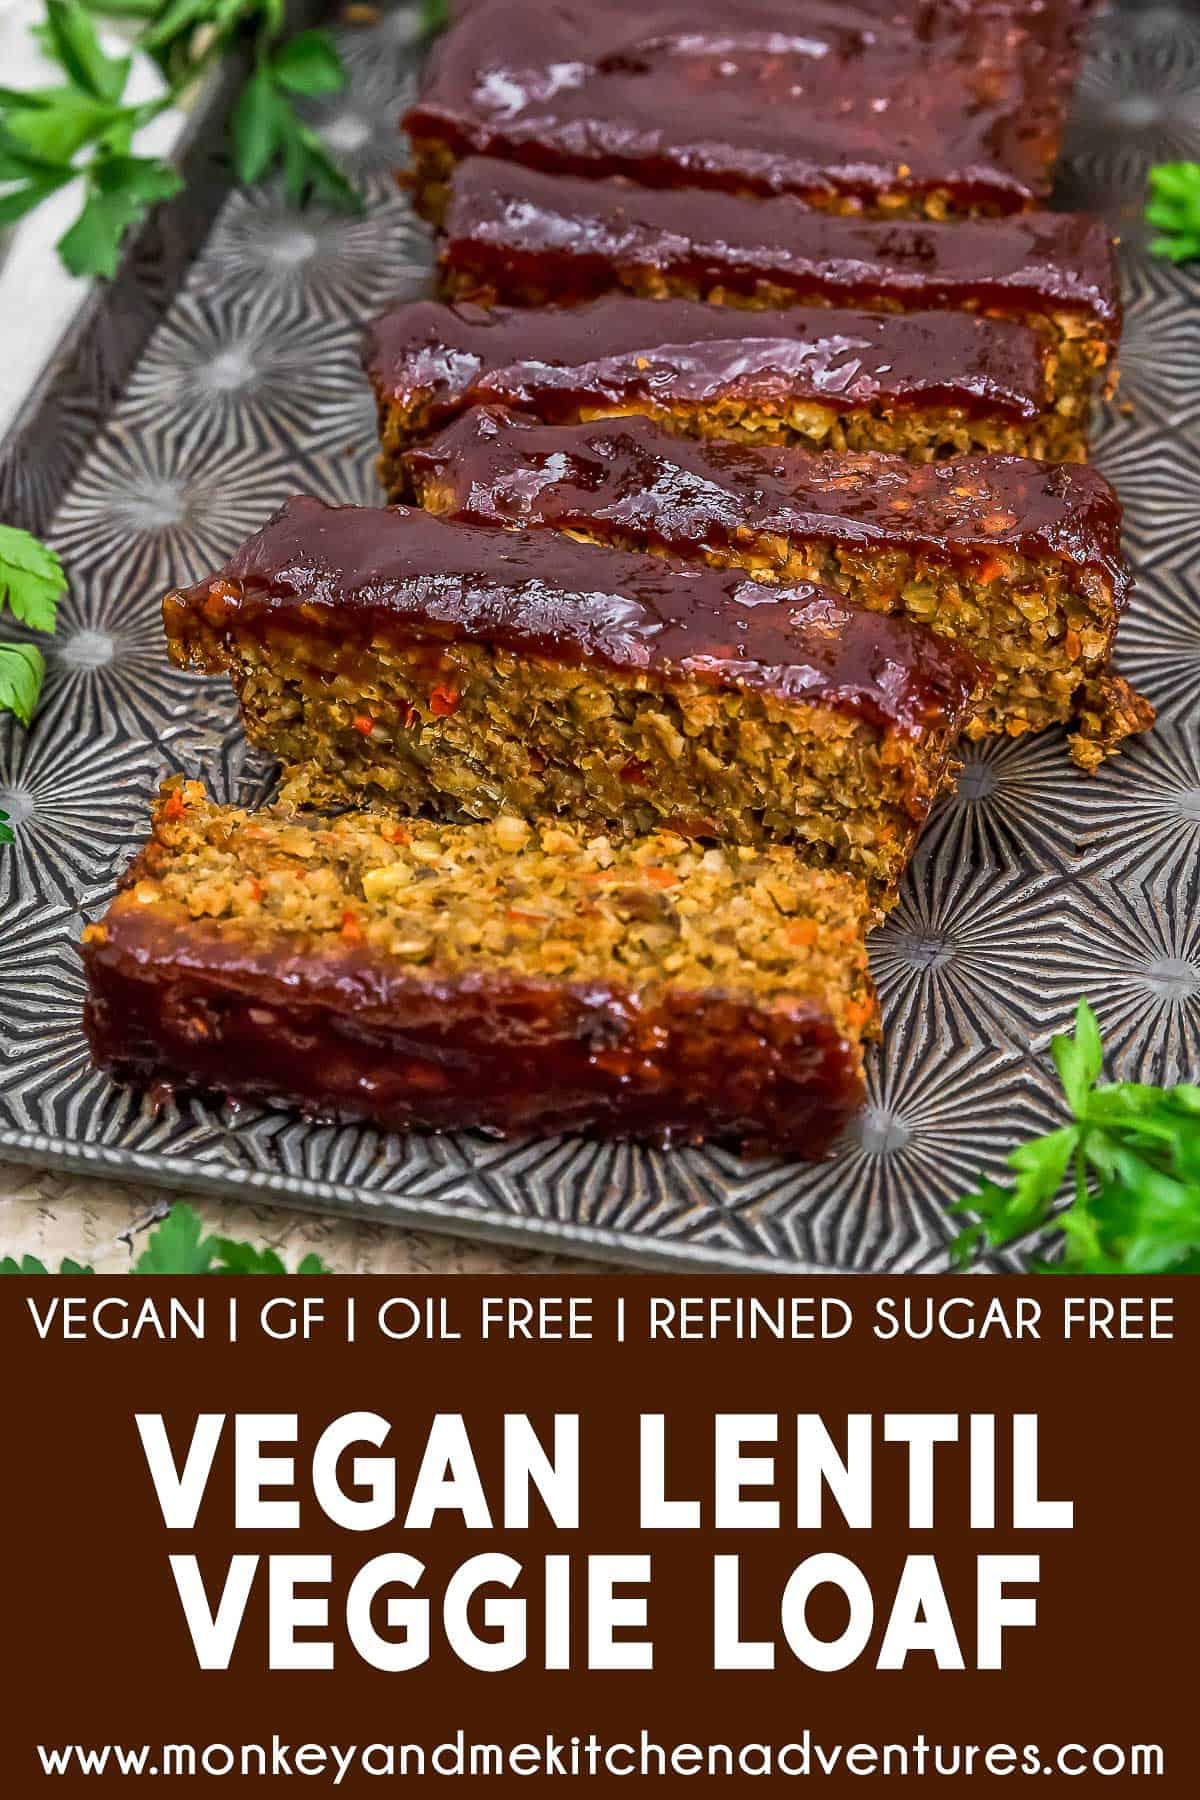 Vegan Lentil Veggie Loaf with text description